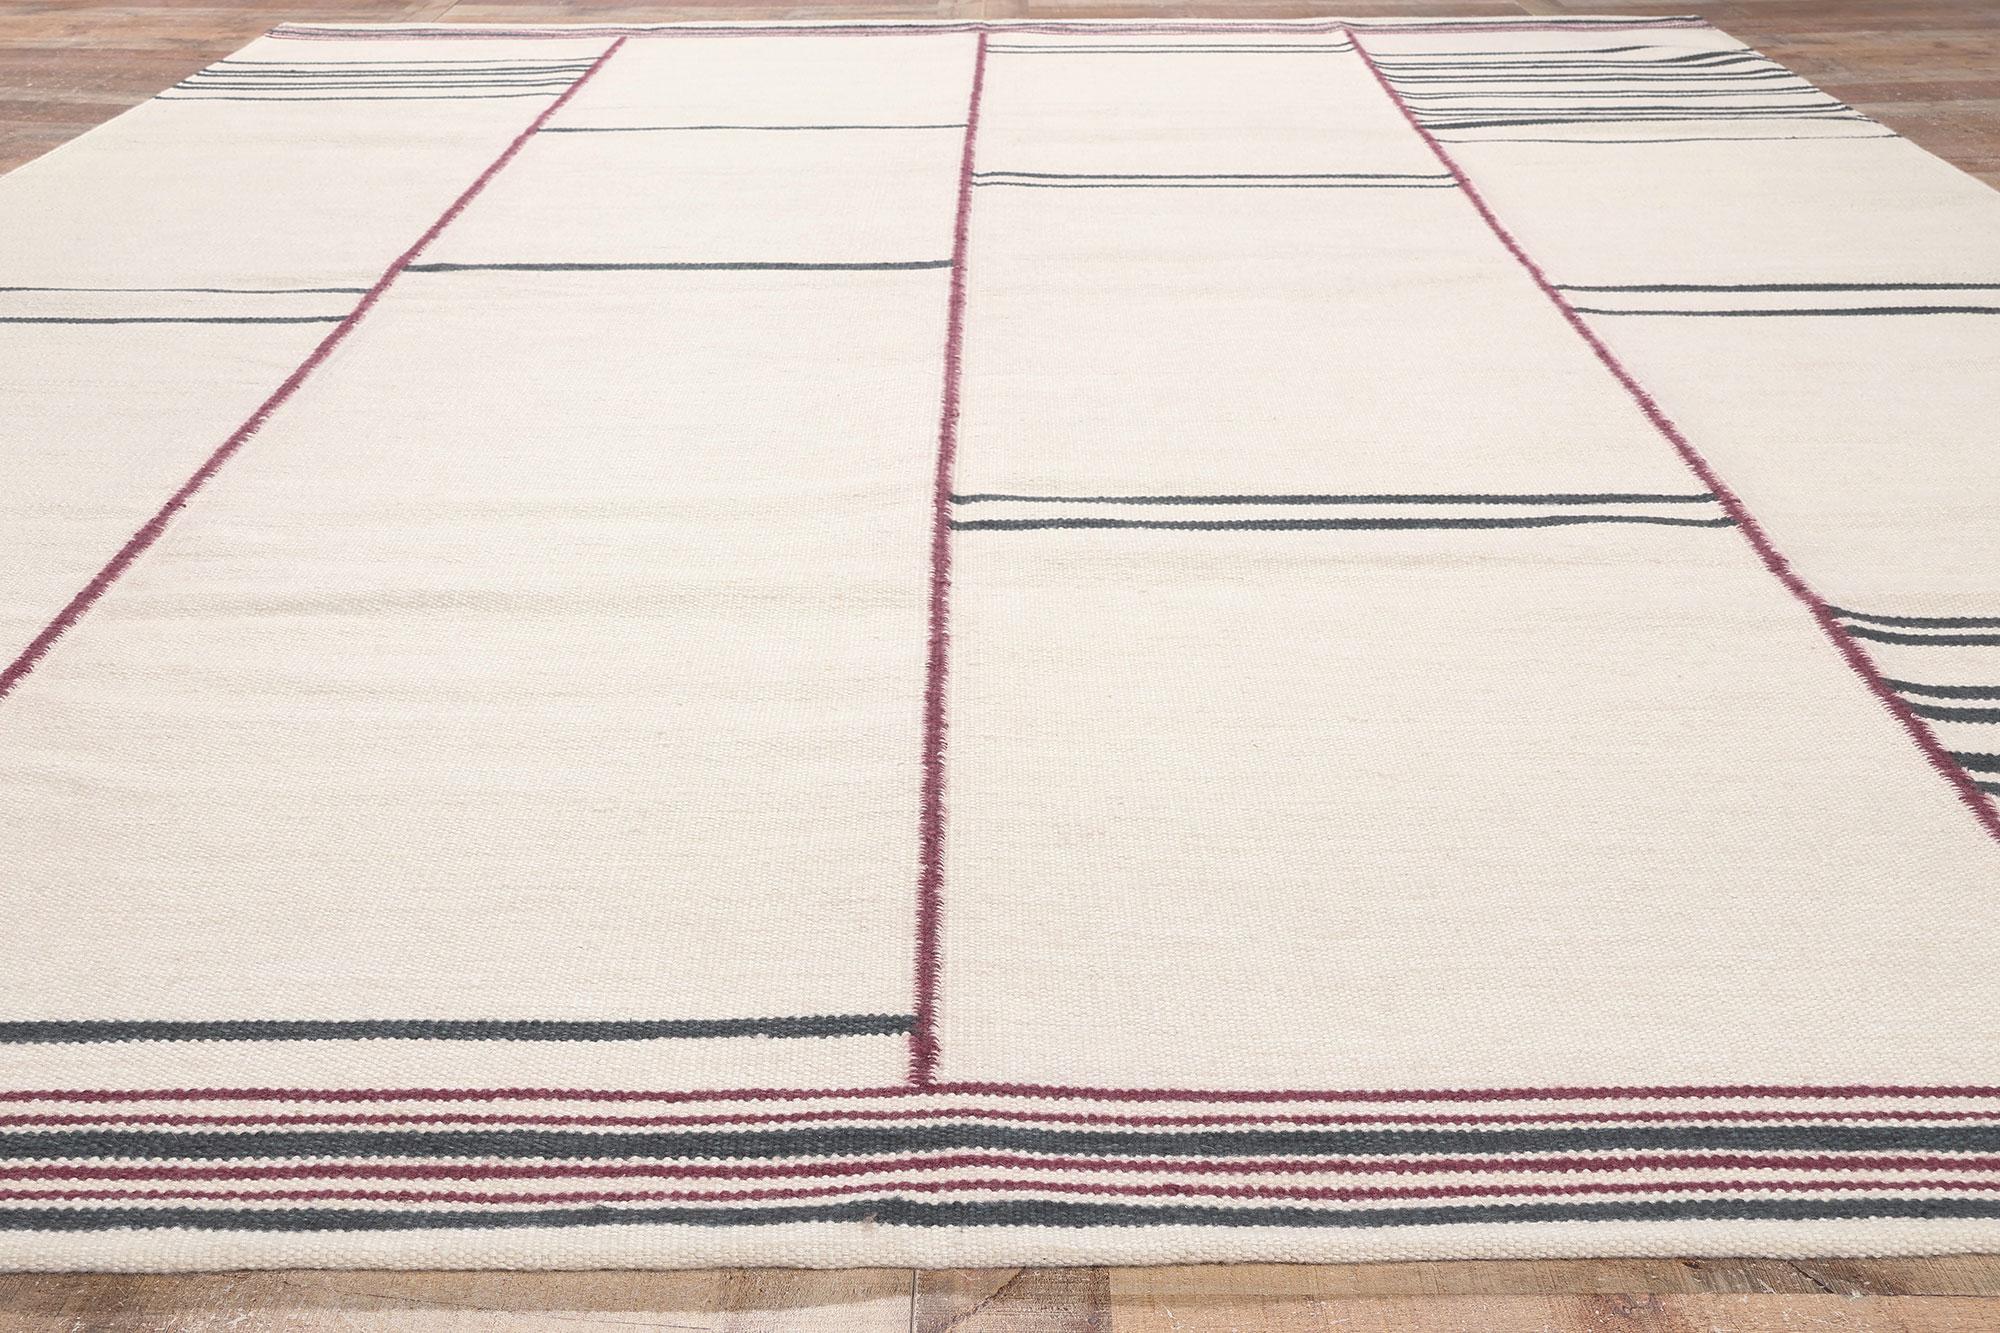 Wool New Swedish Inspired Kilim Rug Earth-Tone Colors, Stege Randmönster For Sale